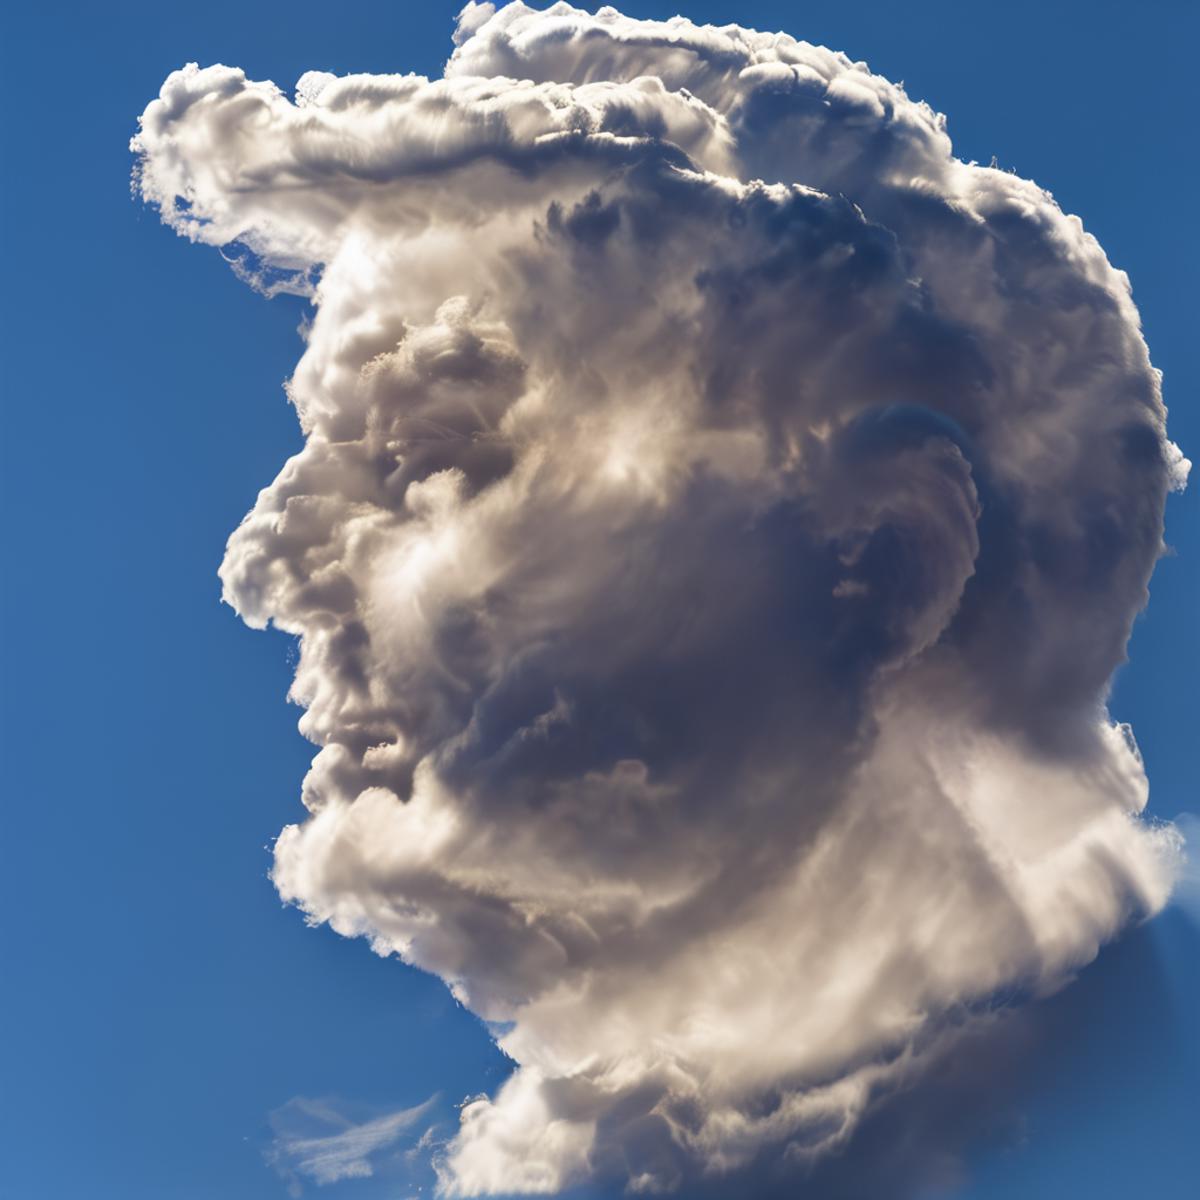 A Trump-shaped cloud in the sky.